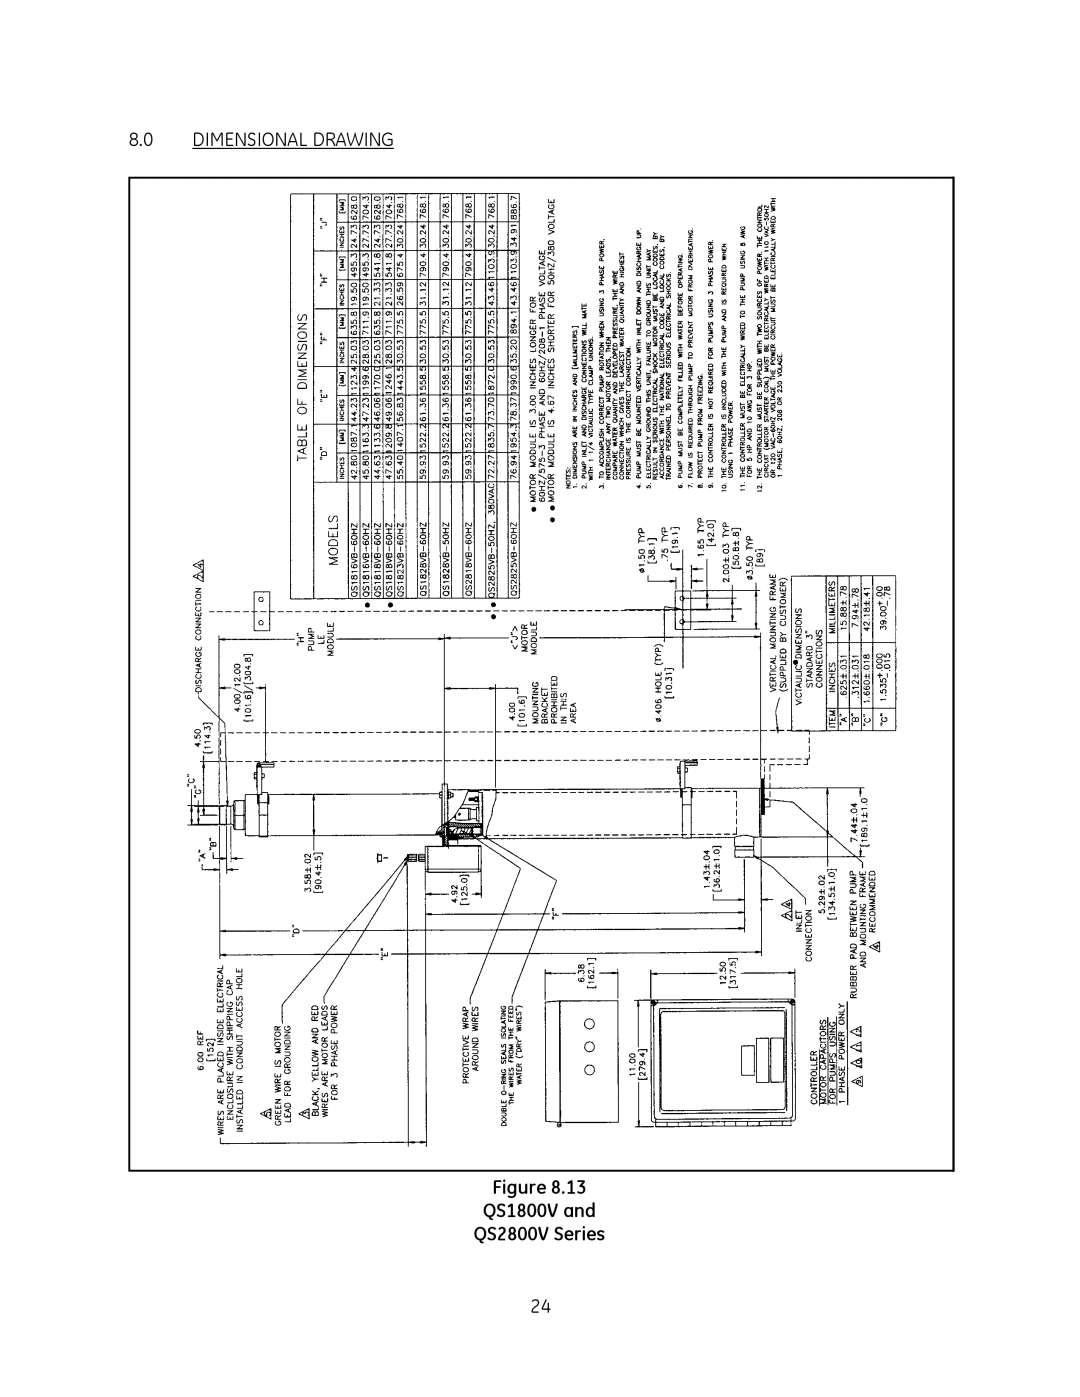 GE manual 8.0DIMENSIONAL DRAWING, Figure QS1800V and QS2800V Series 